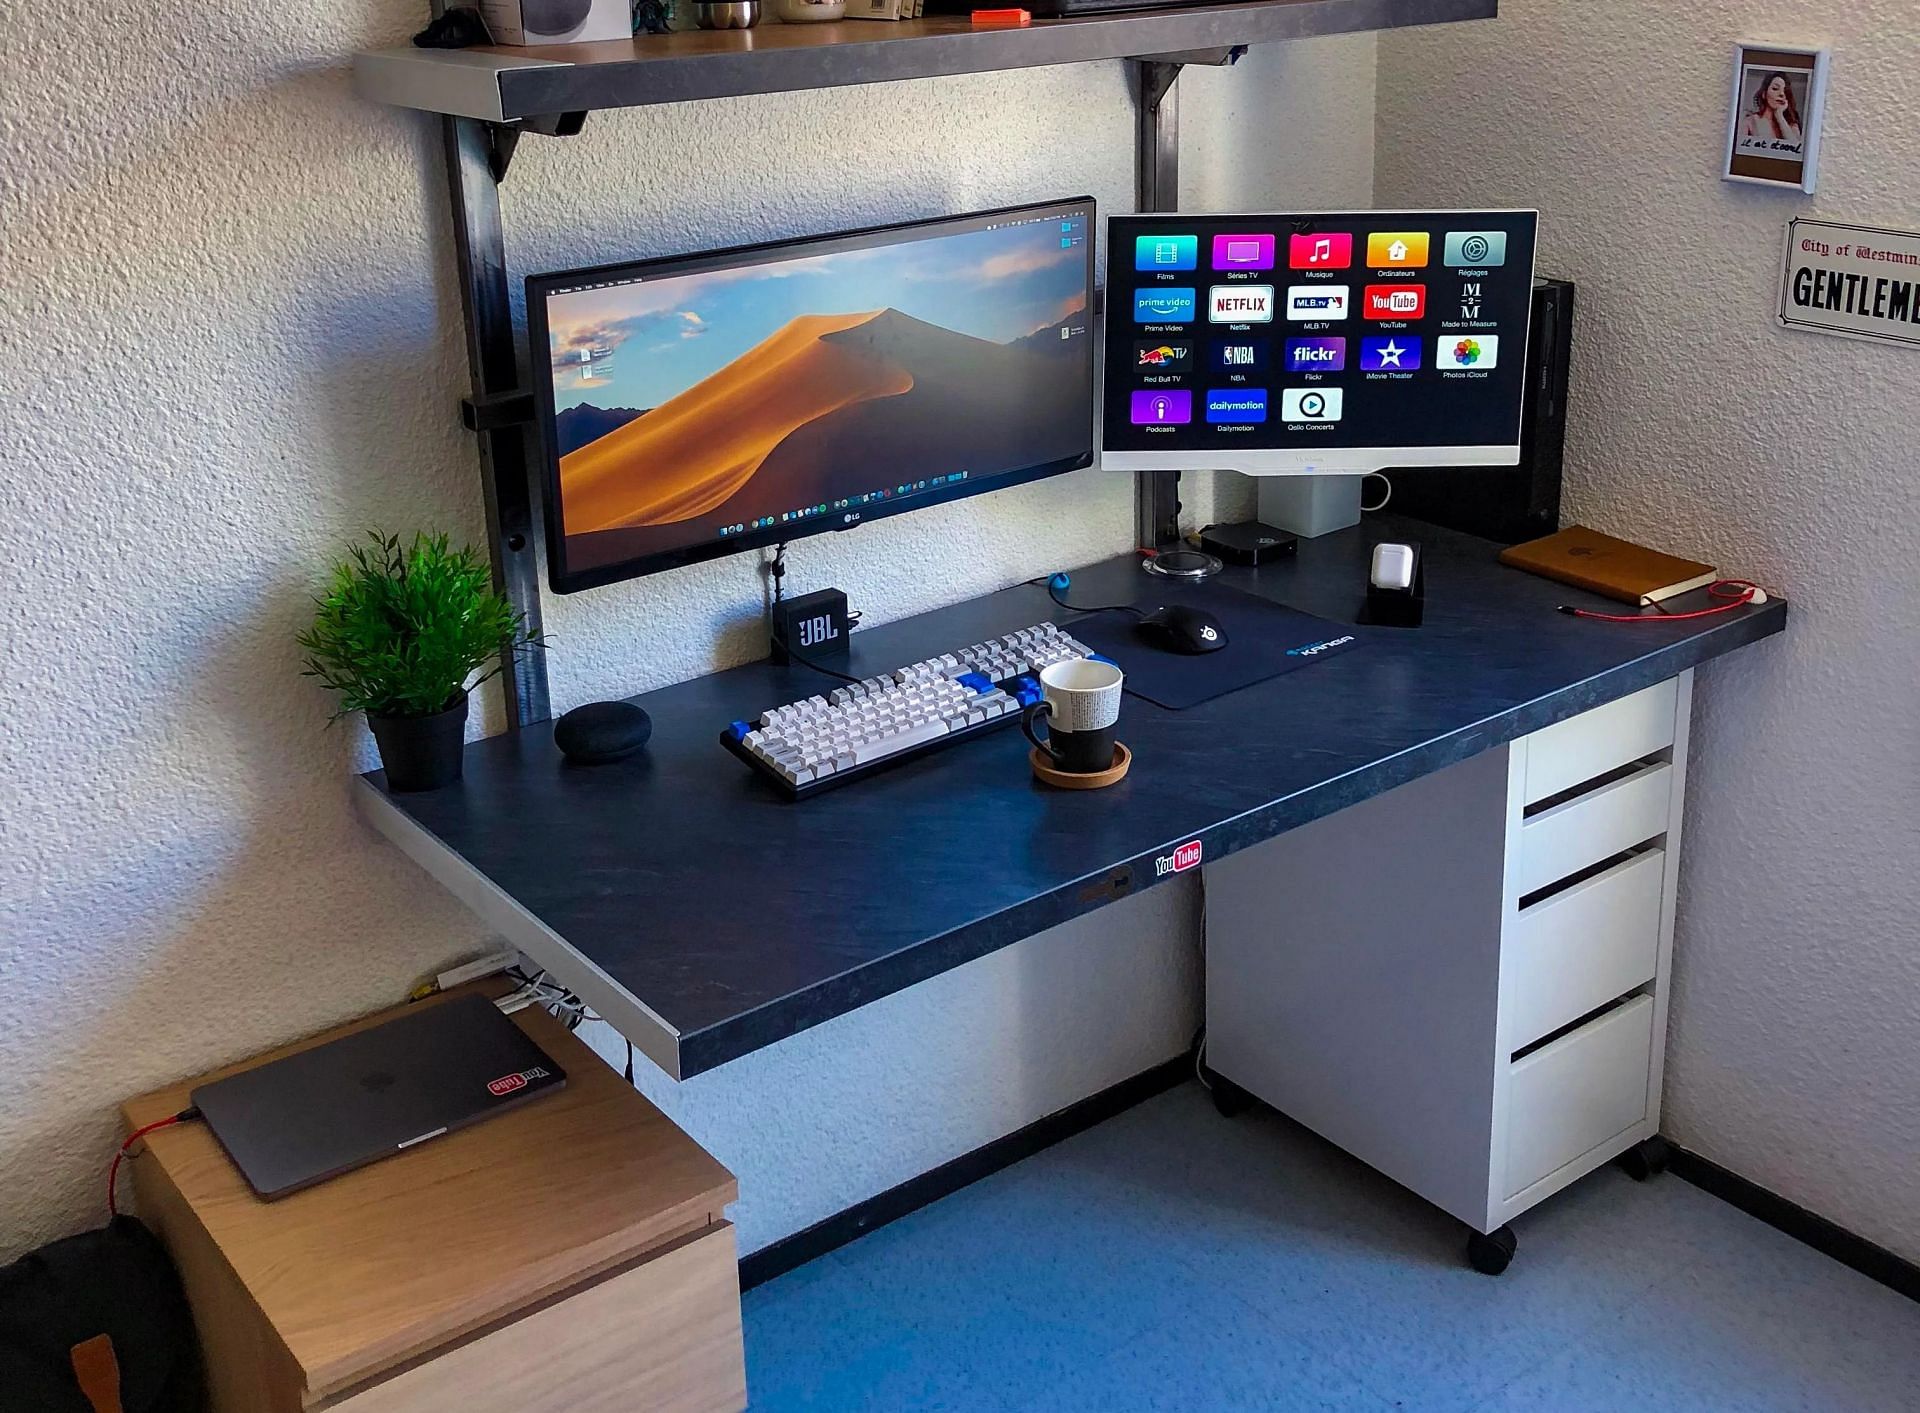 A professional workstation (Image via Reddit/u/ymxyh)